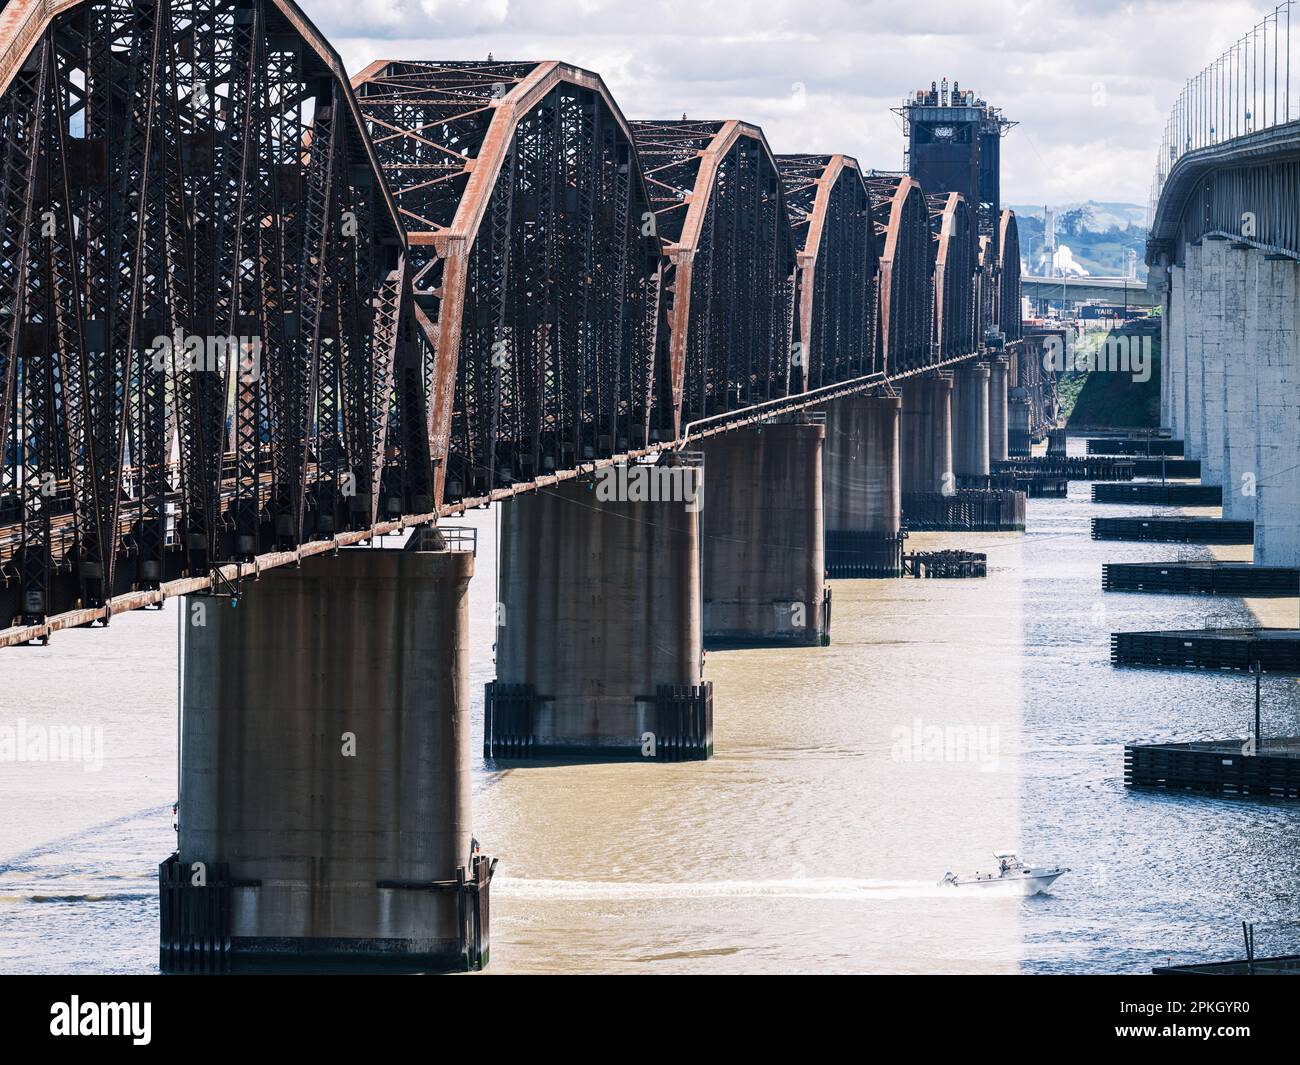 A speed boat passes under Benicia, California's rusty-looking steel railway bridge. Stock Photo